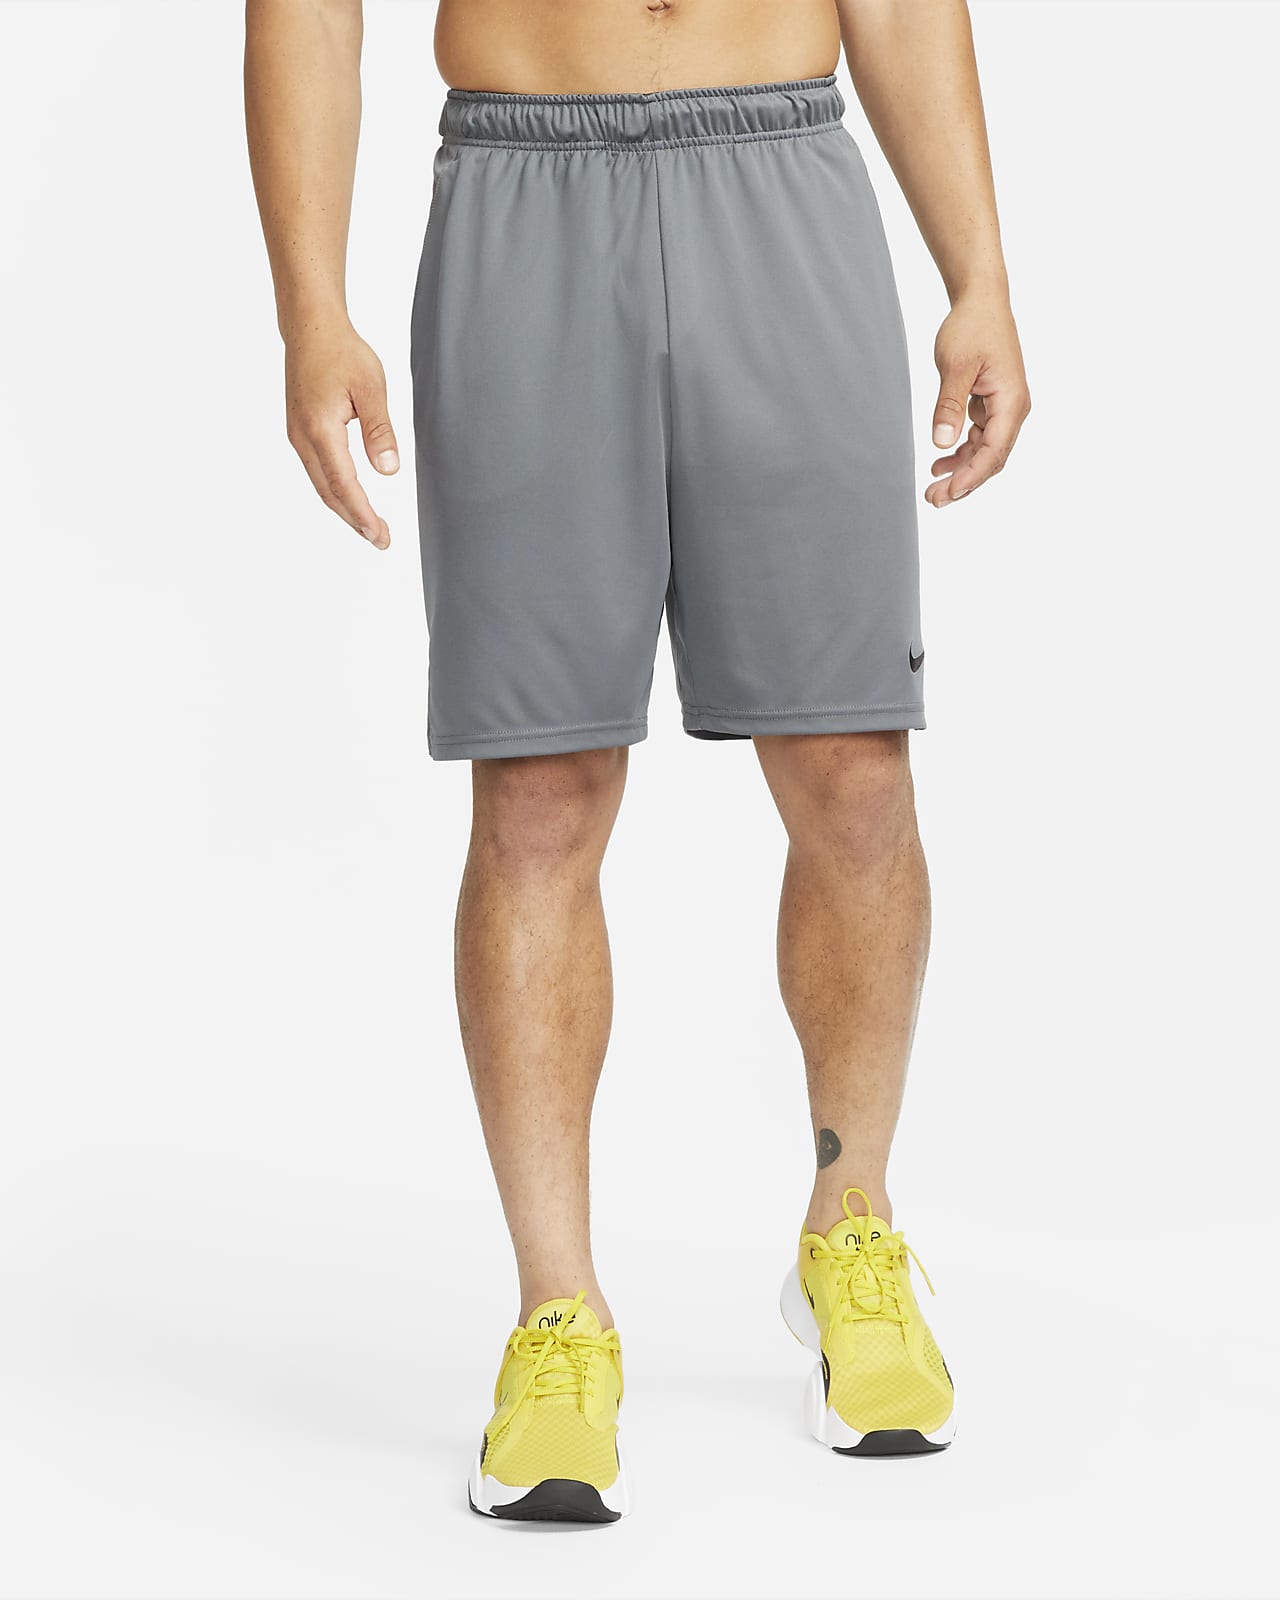 Nike Dri-FIT Men's 20cm (approx.) Knit Training Shorts